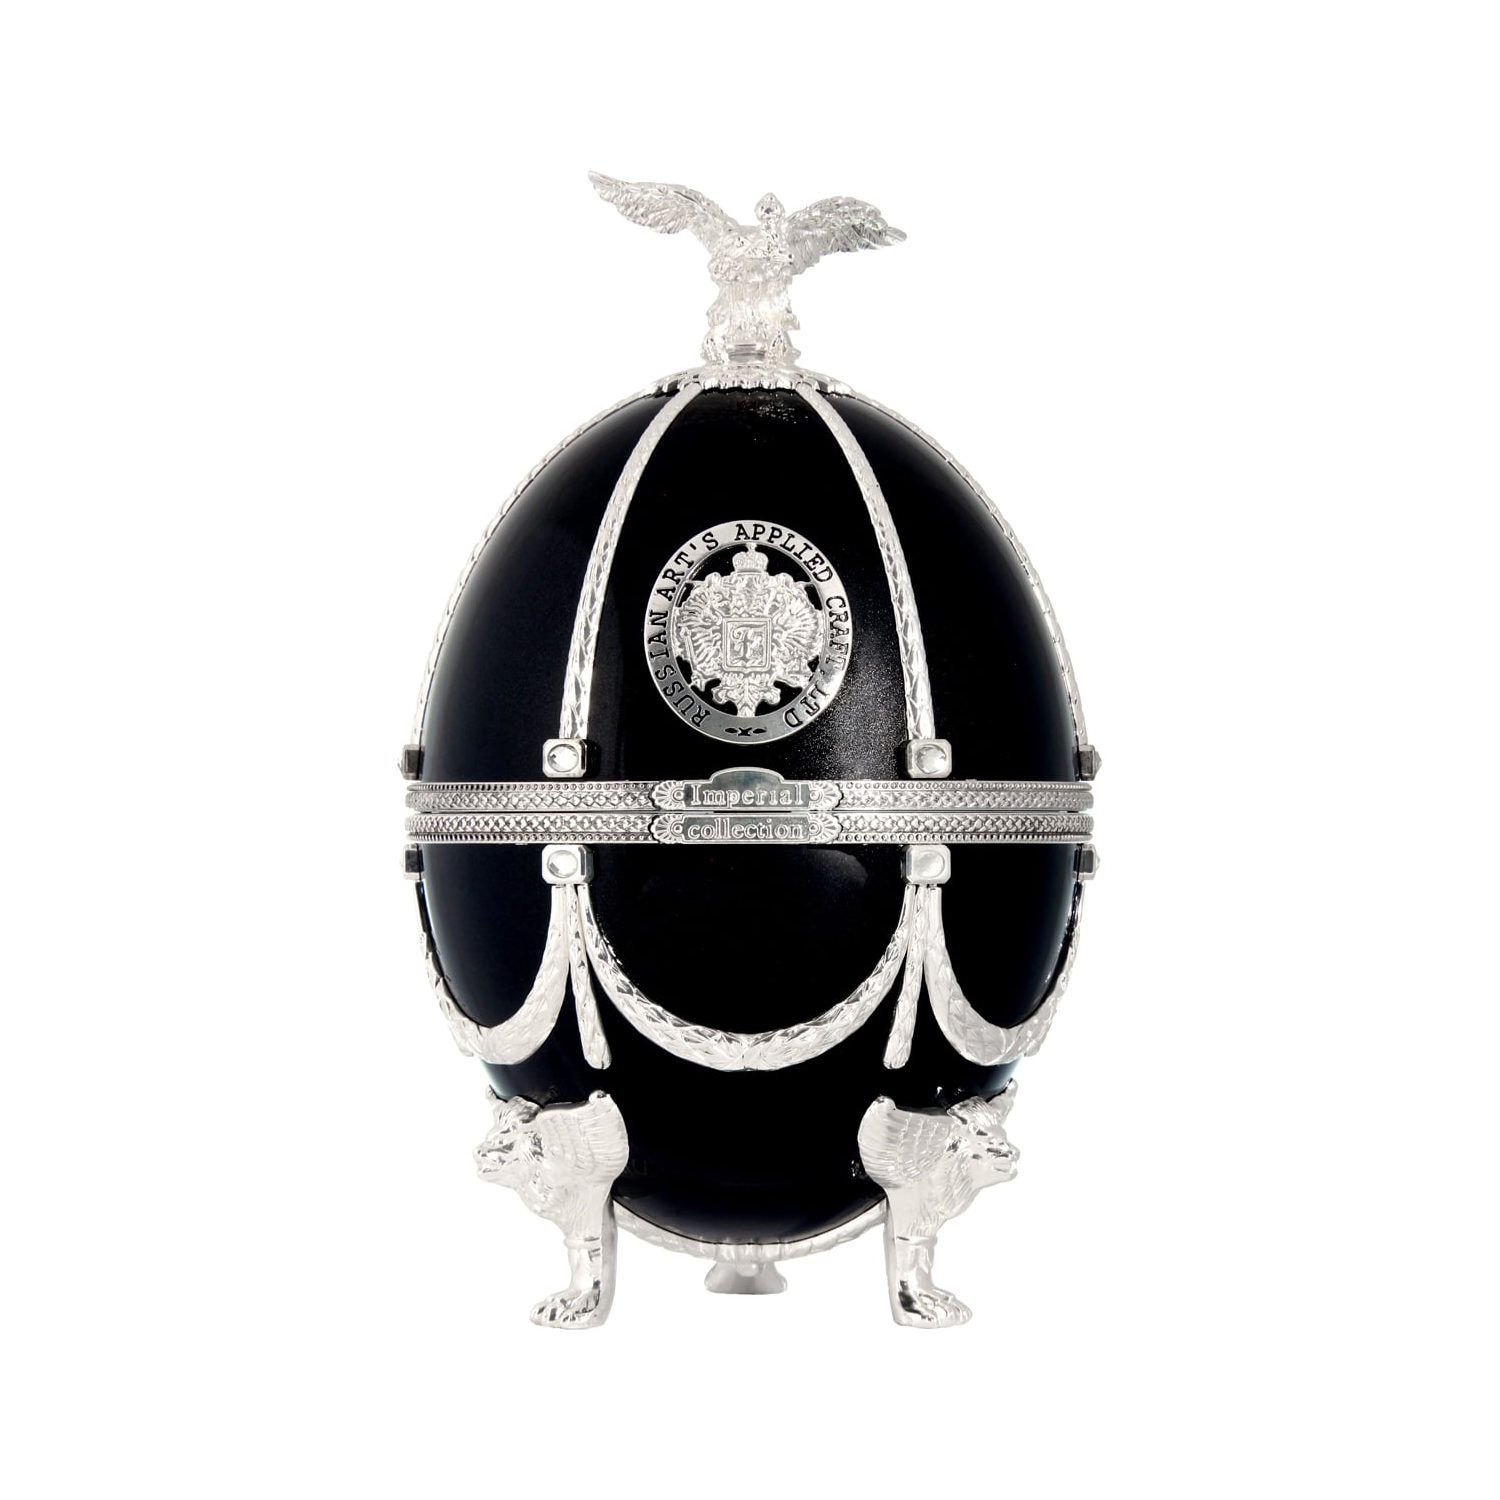 Carskaja Imperial Collection Faberge Black 40% 0,7L